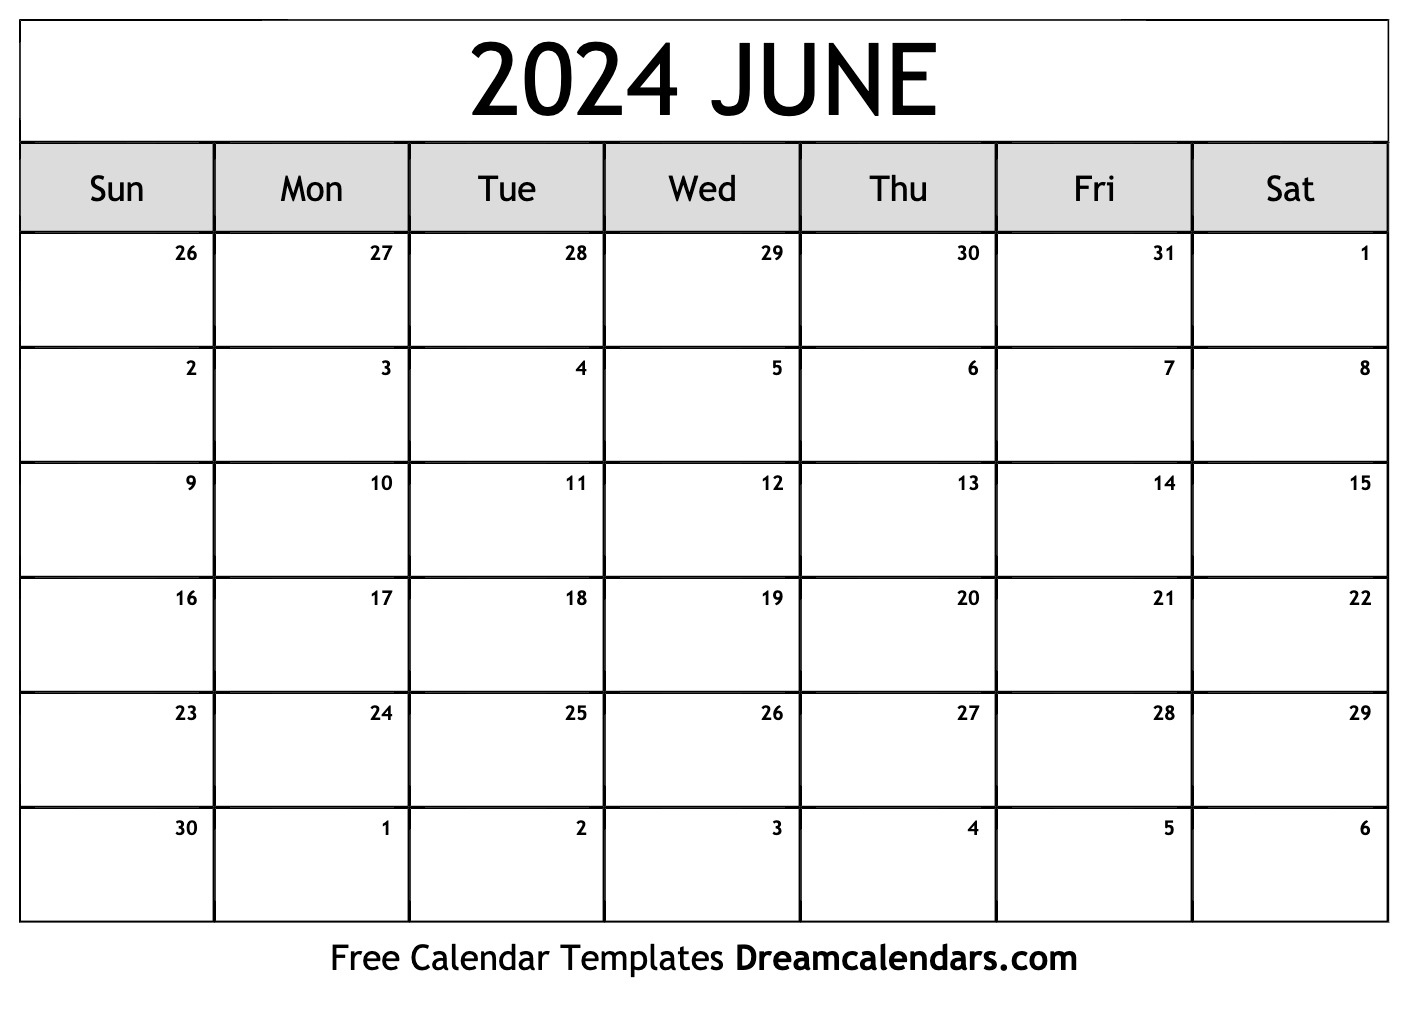 June 2024 Calendar | Free Blank Printable With Holidays | Free Printable Calendar 2024 June